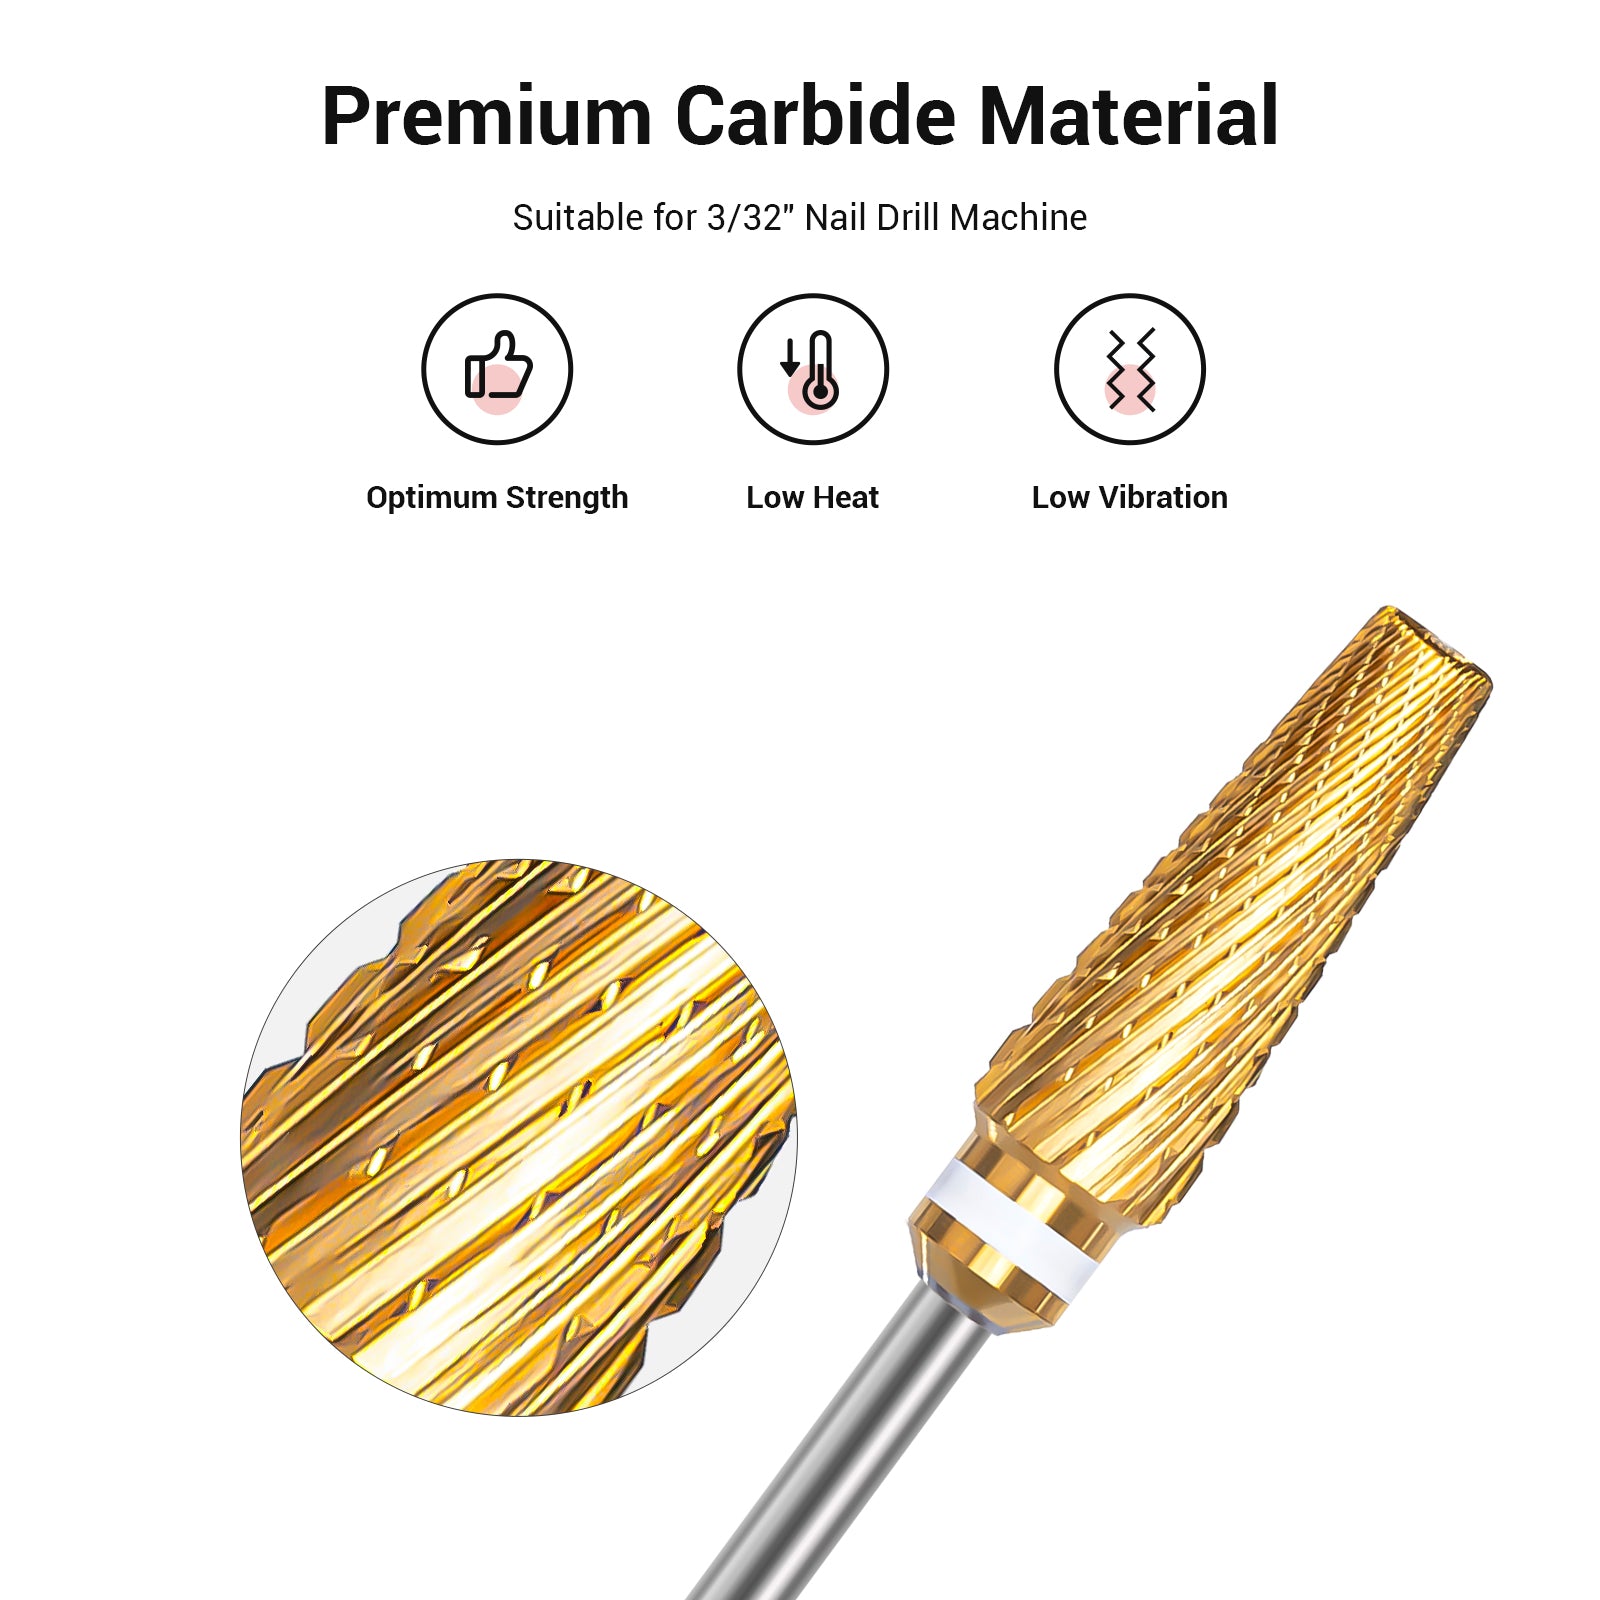 5 in 1 Pro Tungsten Carbide Nail Drill Bits-XC+M+3XF(1pc)